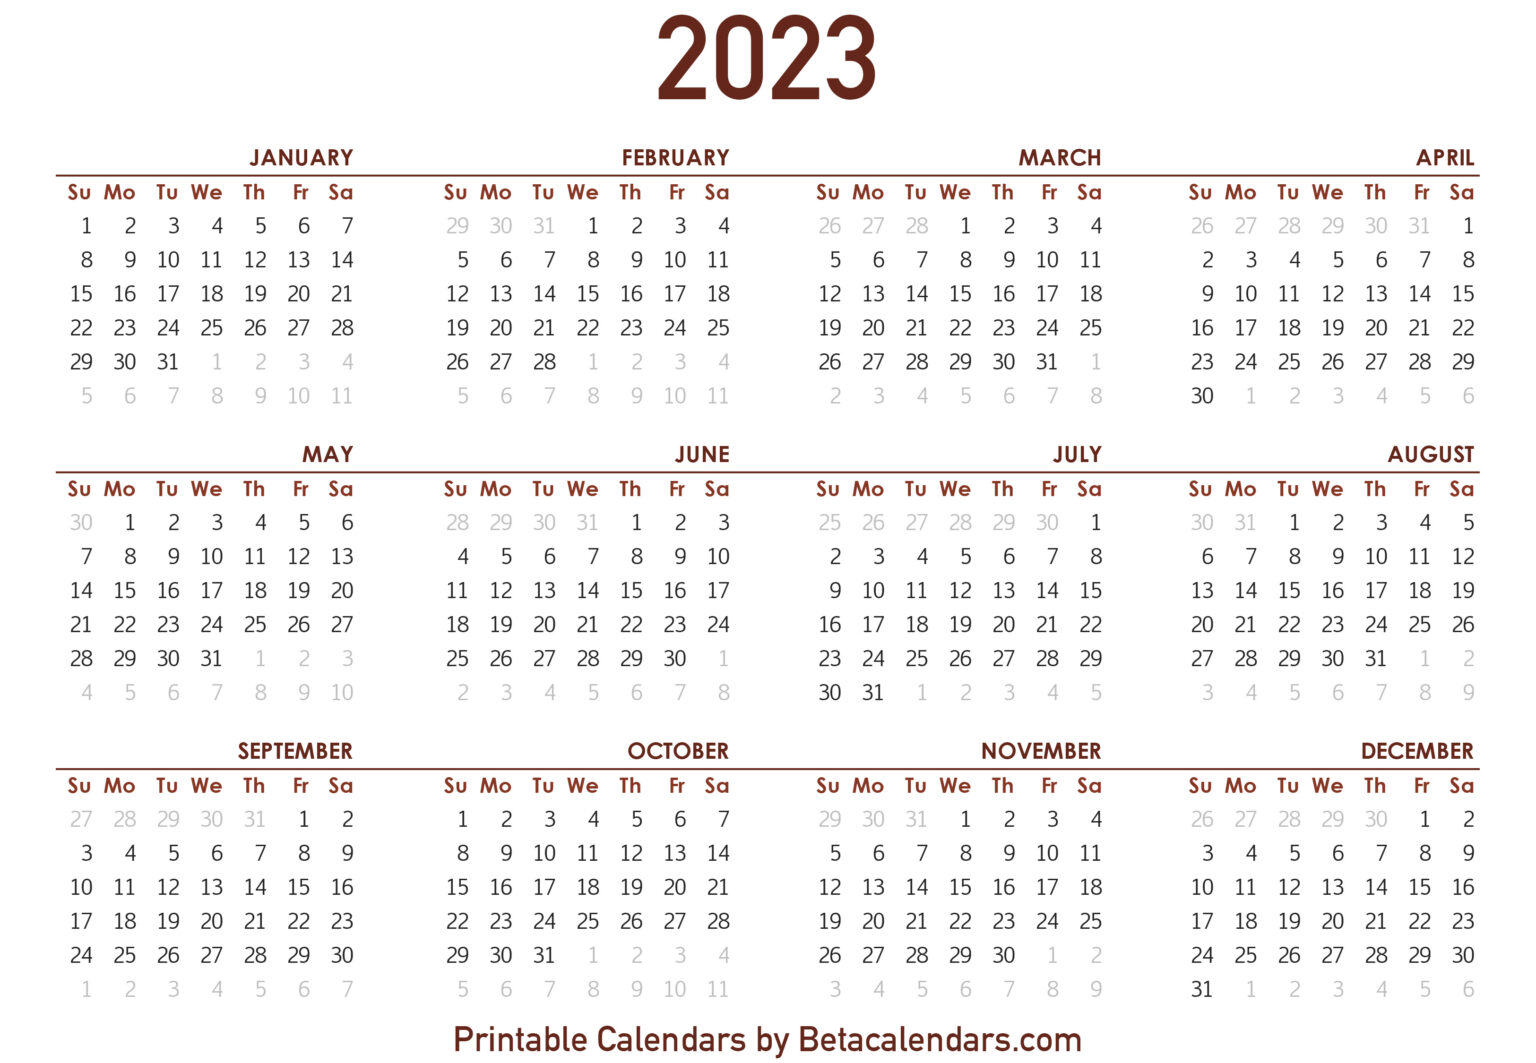 2023 Calendar Beta Calendars